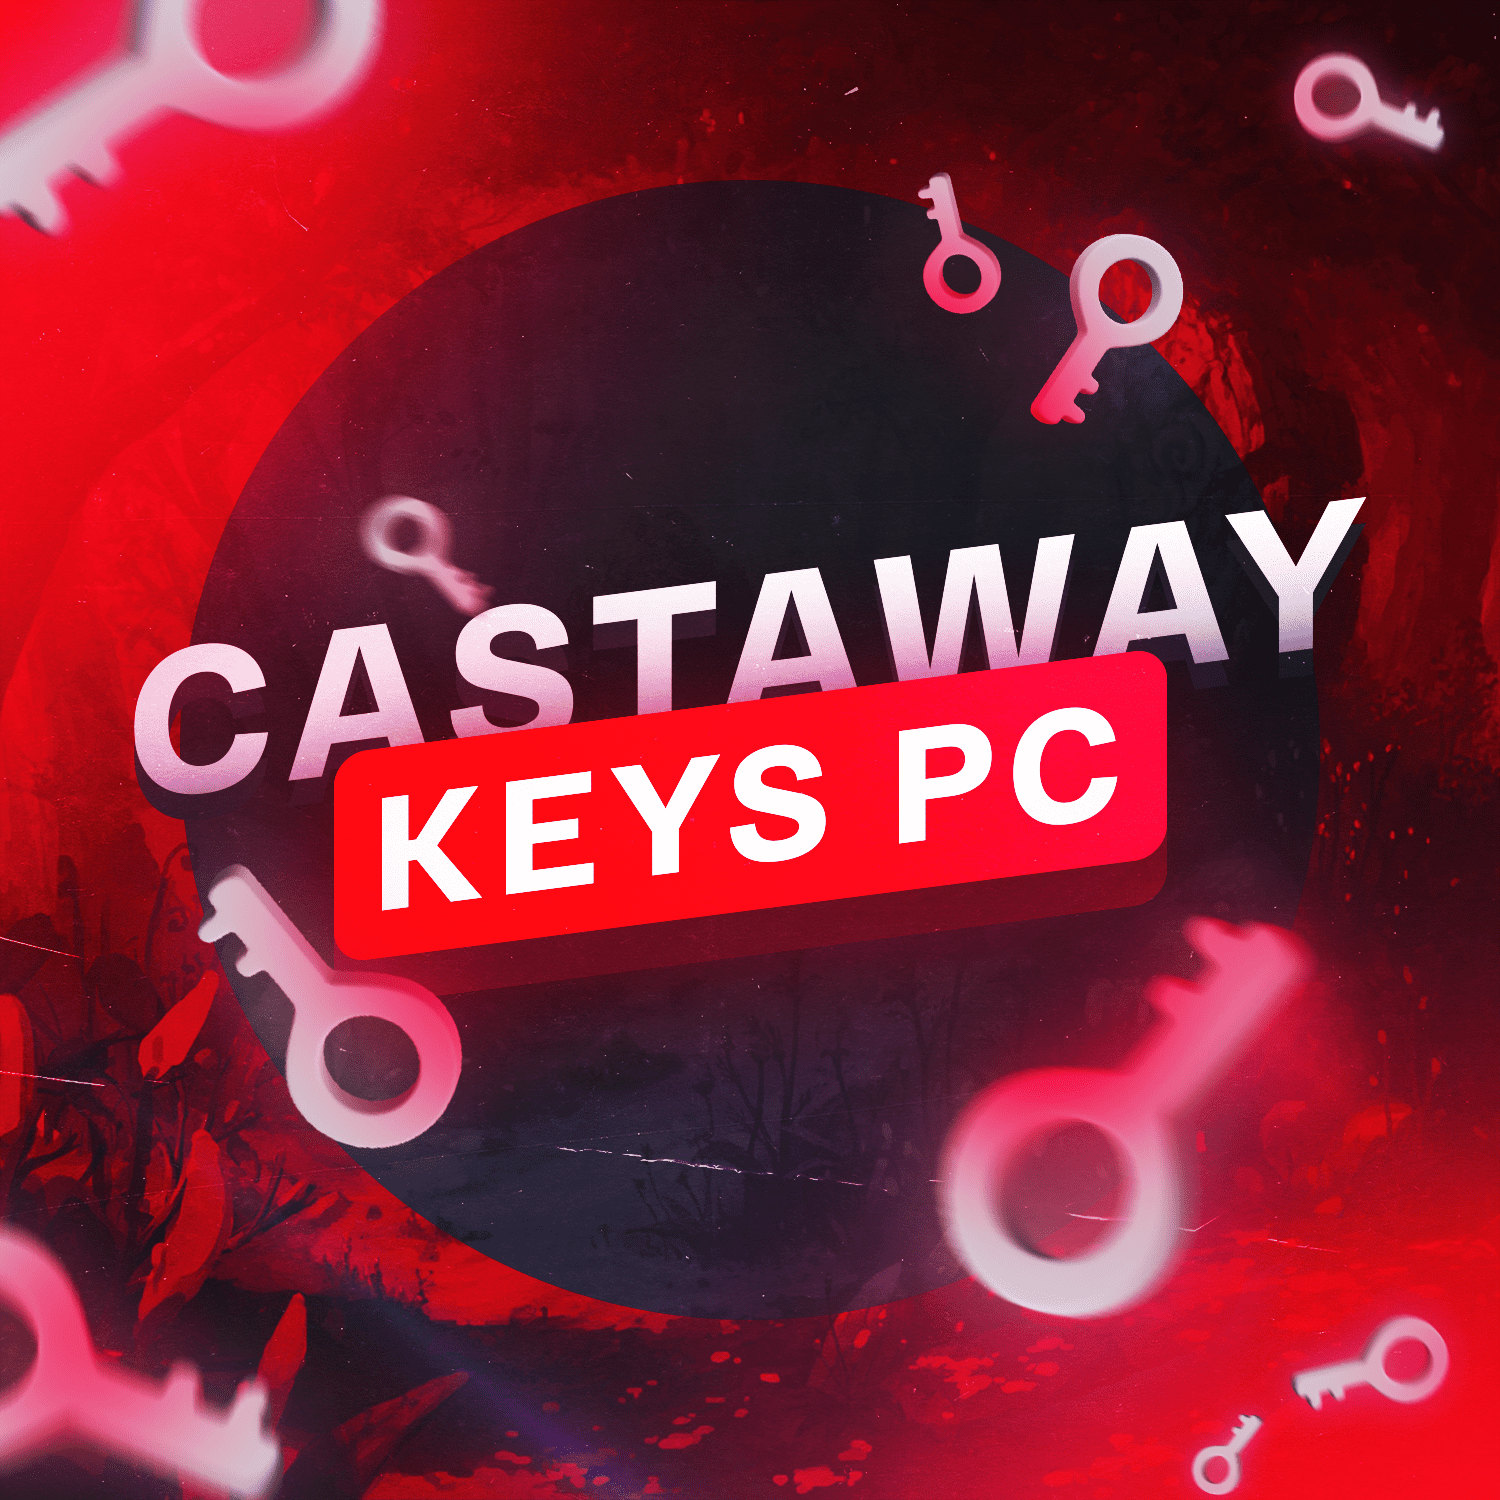 Castaway keys pubg фото 62